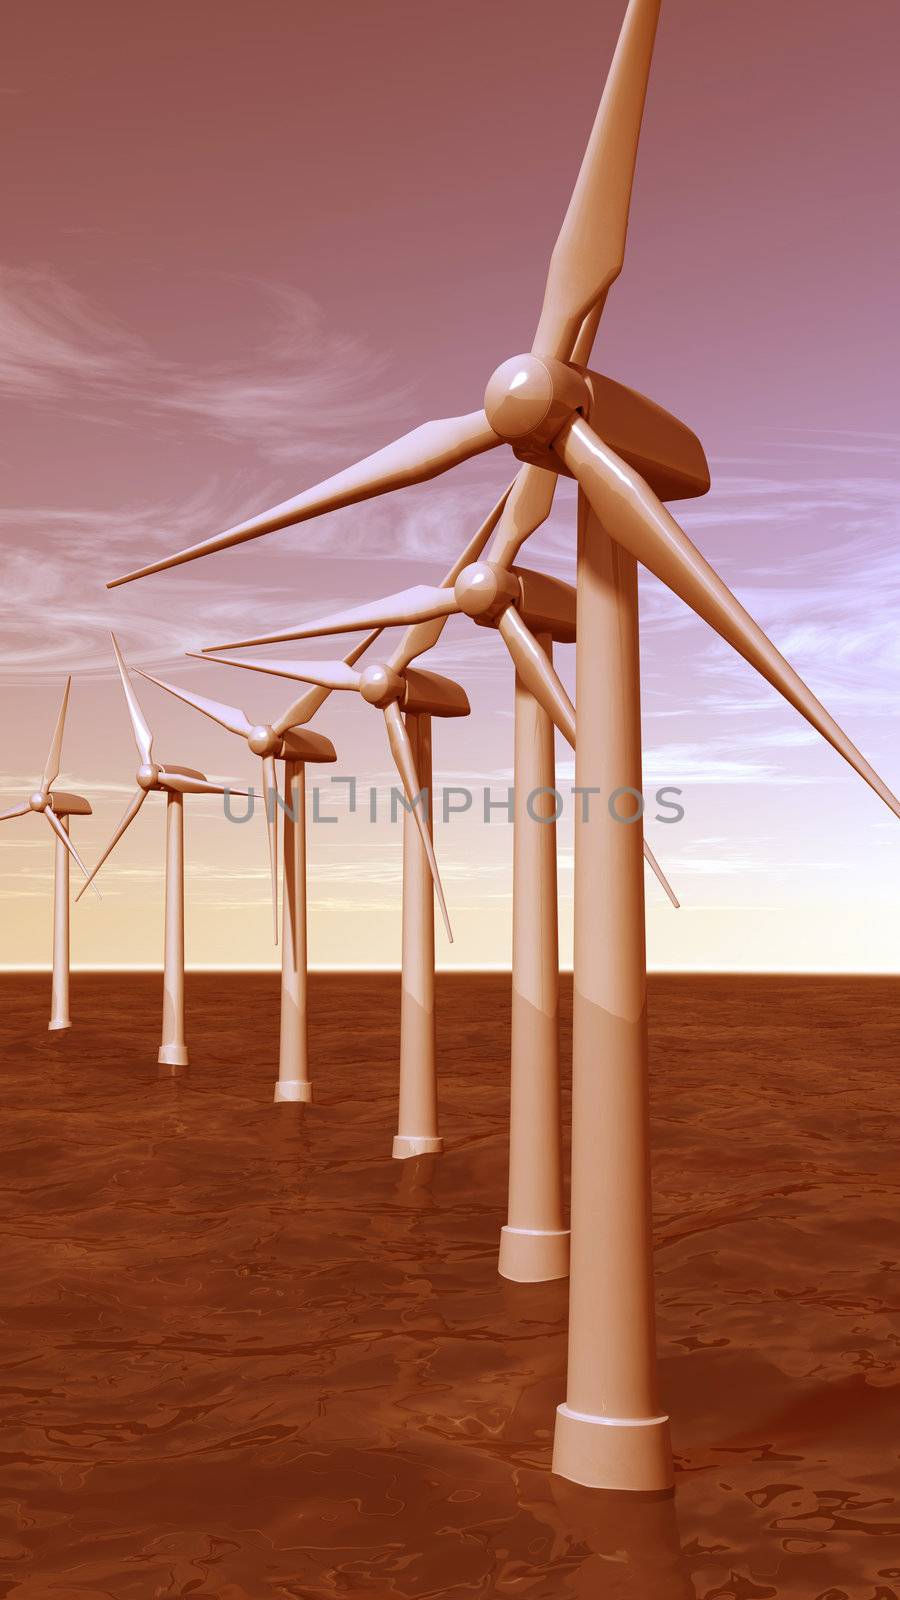 Offshore wind turbines in portrait by shkyo30